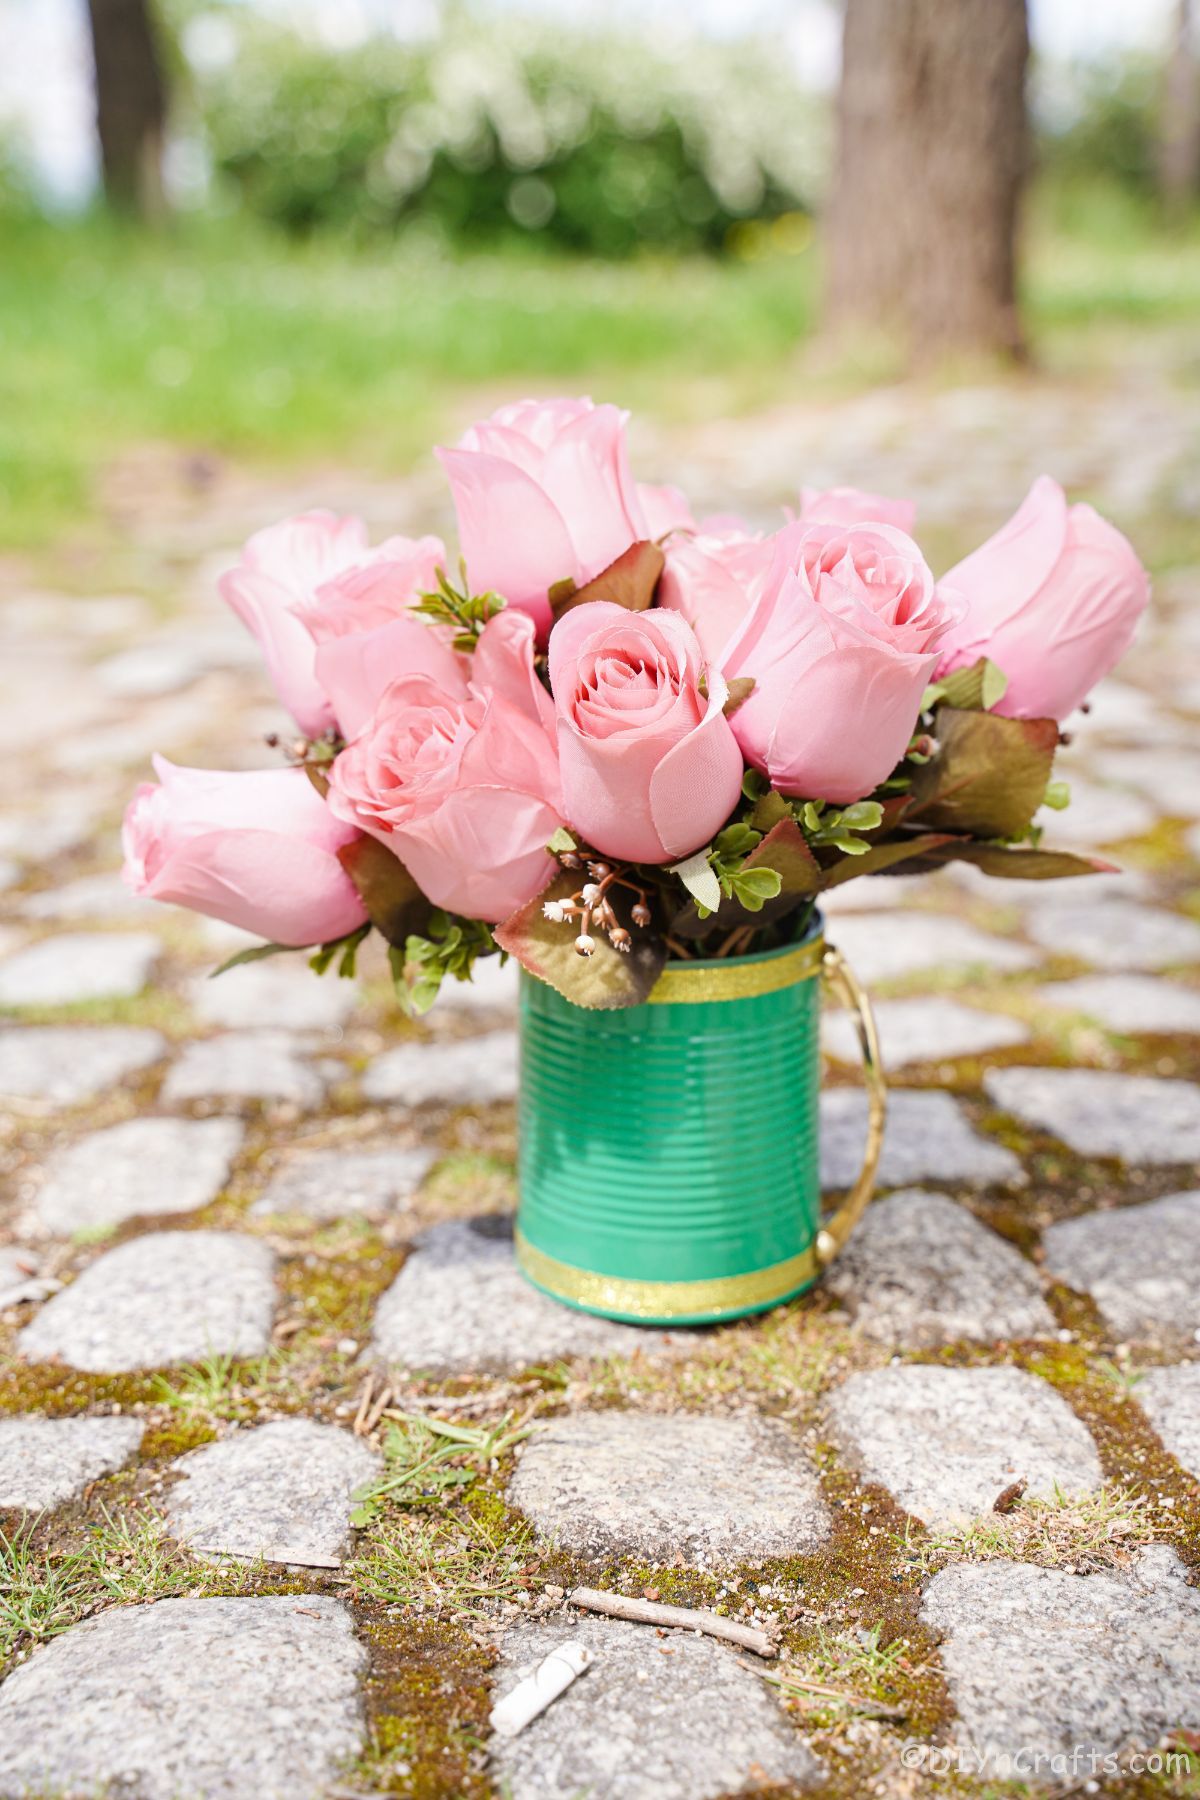 pink roses inside green mug on rock path